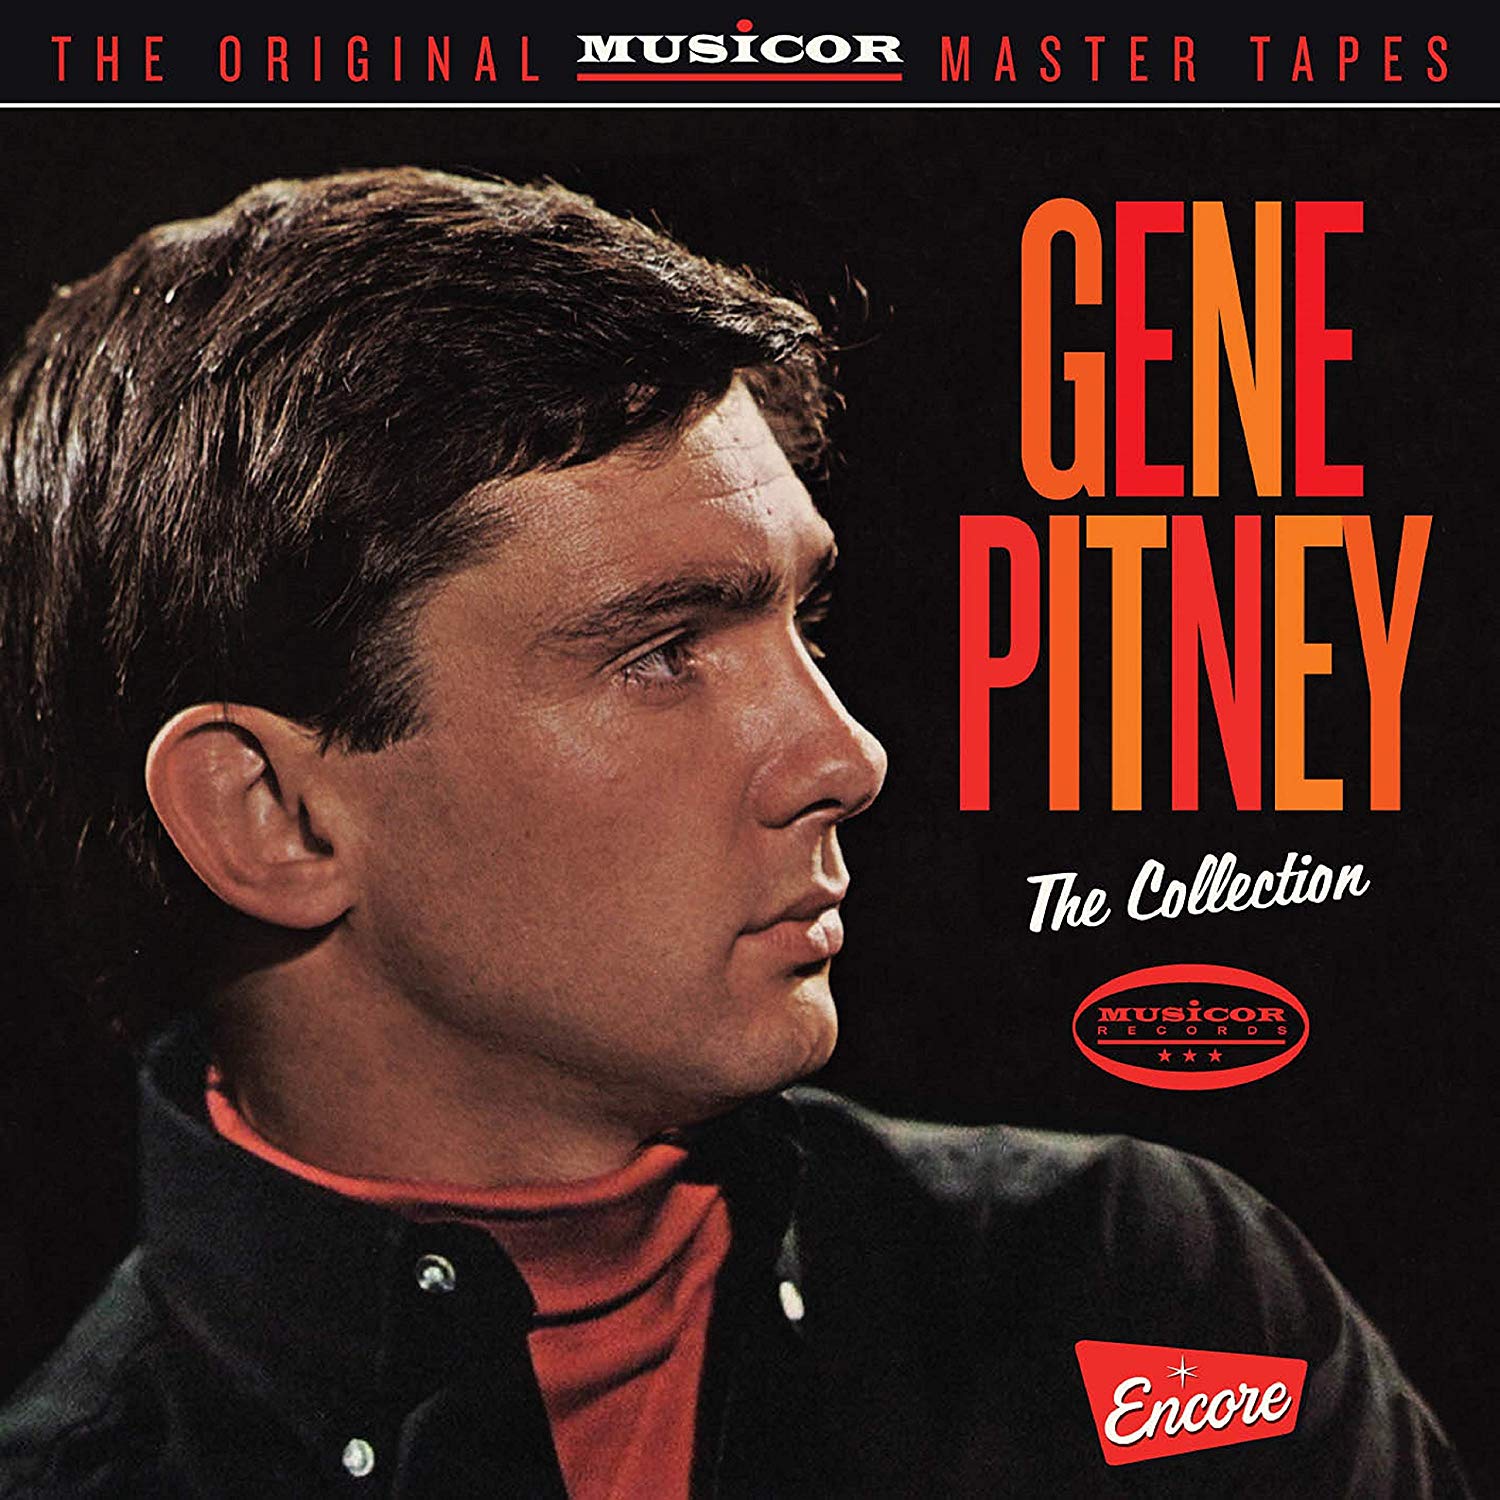 The Collection Gene Pitney ジーン ピットニー Old Rock ディスクユニオン オンラインショップ Diskunion Net